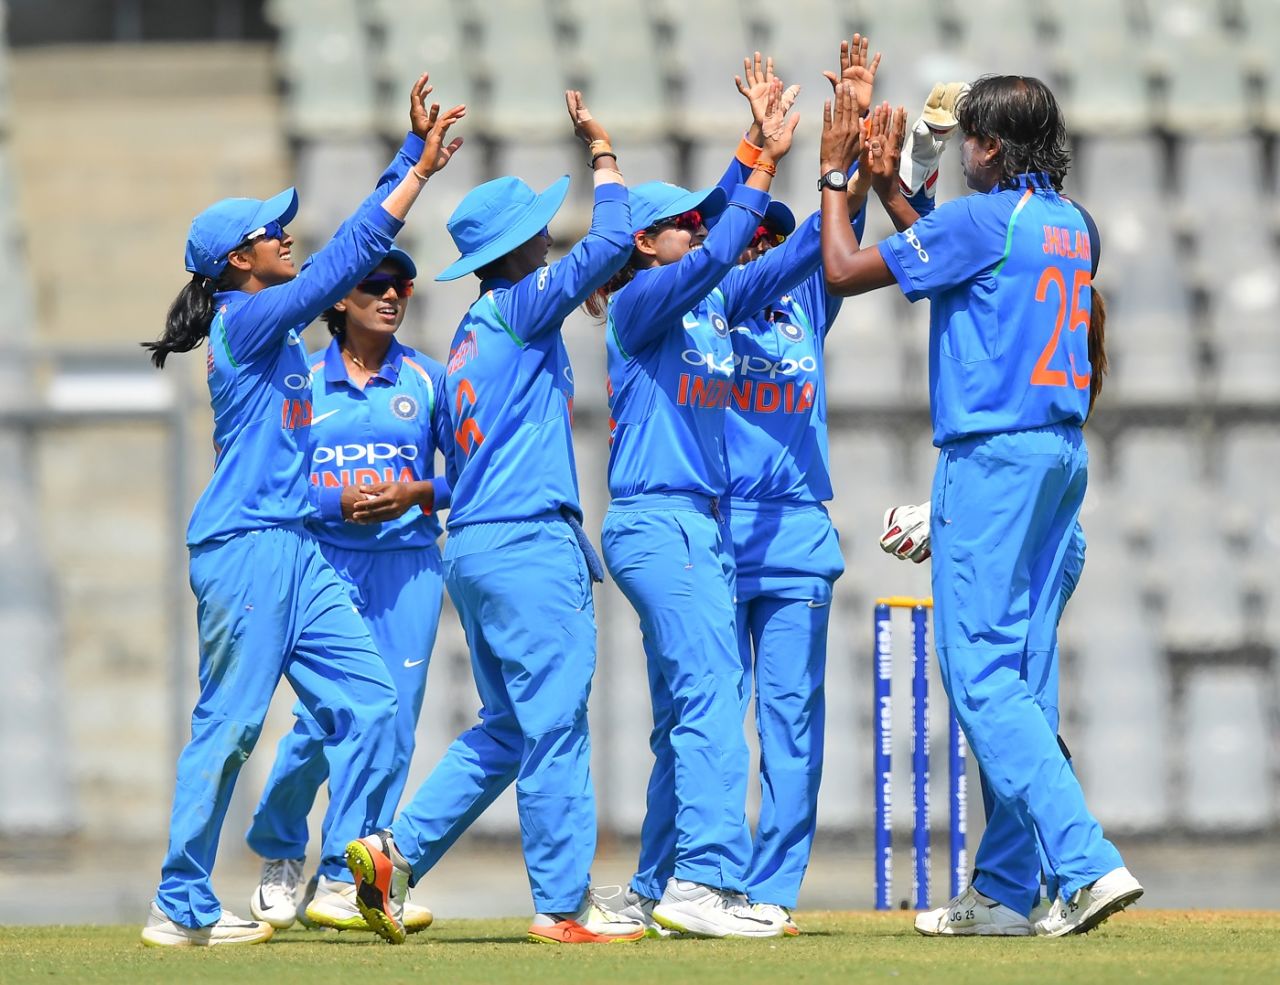 Jhulan Goswami celebrates a wicket with team-members, India Women v England Women, 3rd ODI, Mumbai, February 28, 2019